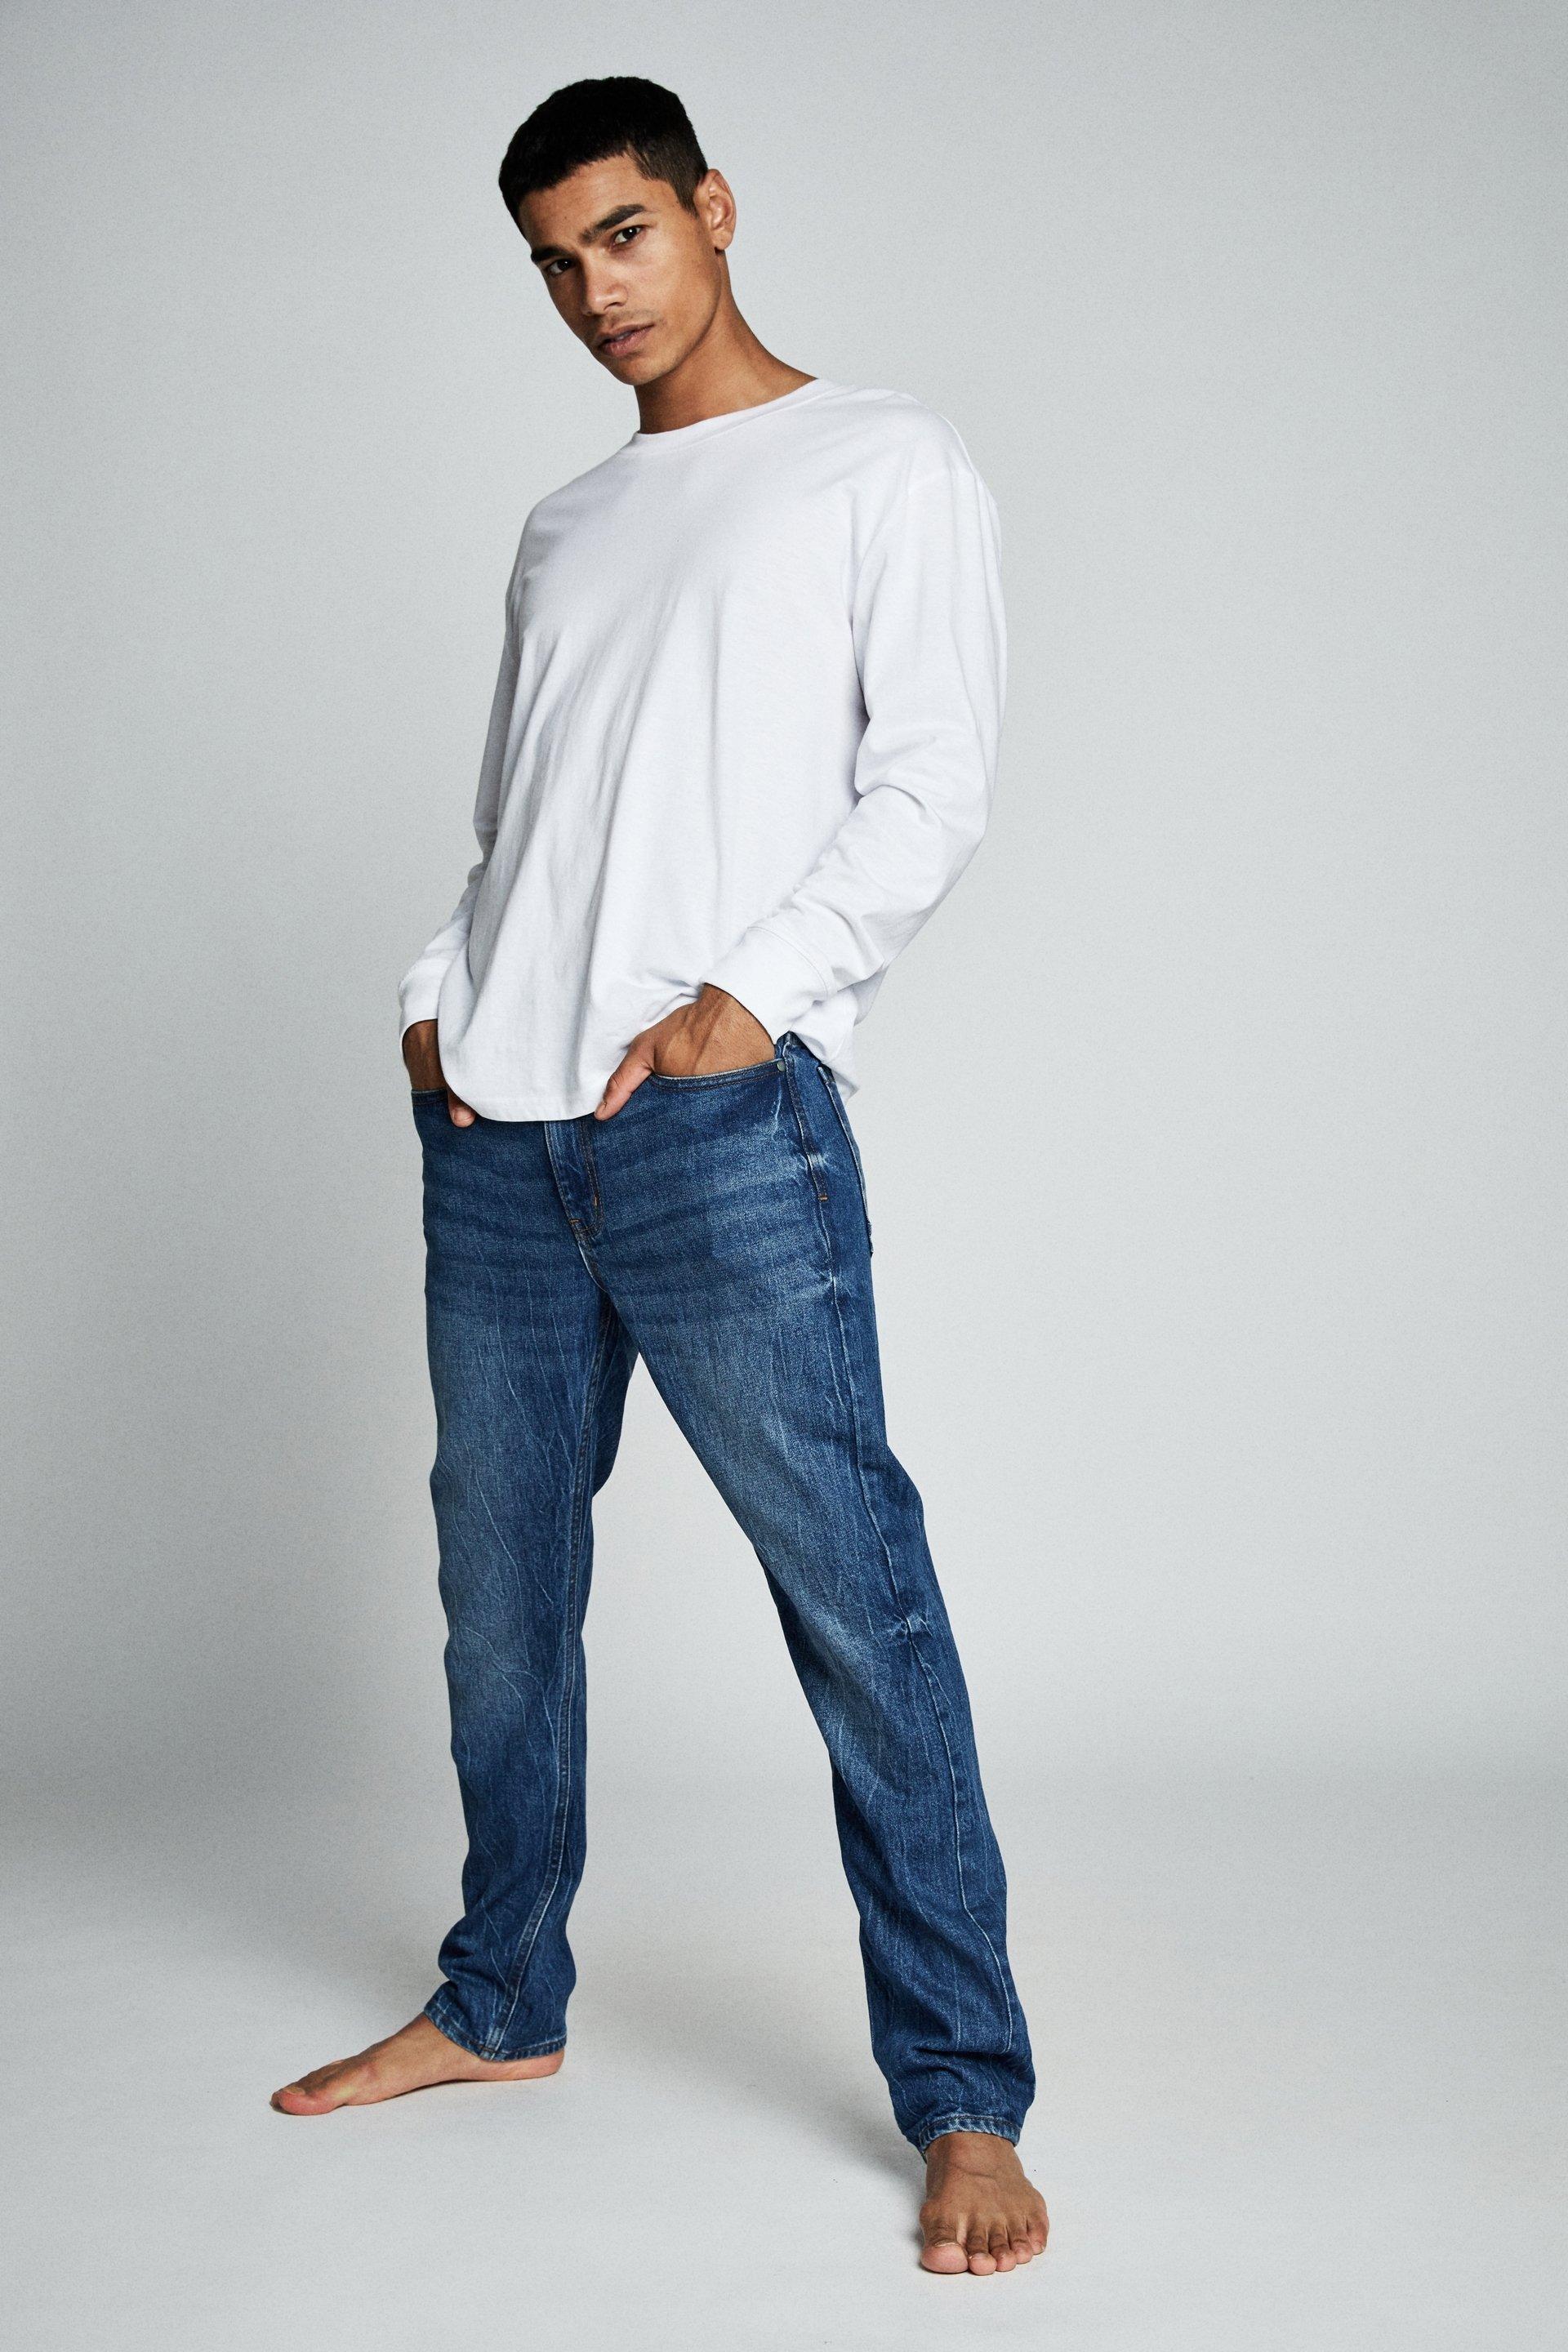 Tapered leg jean - aged indigo Cotton On Jeans | Superbalist.com